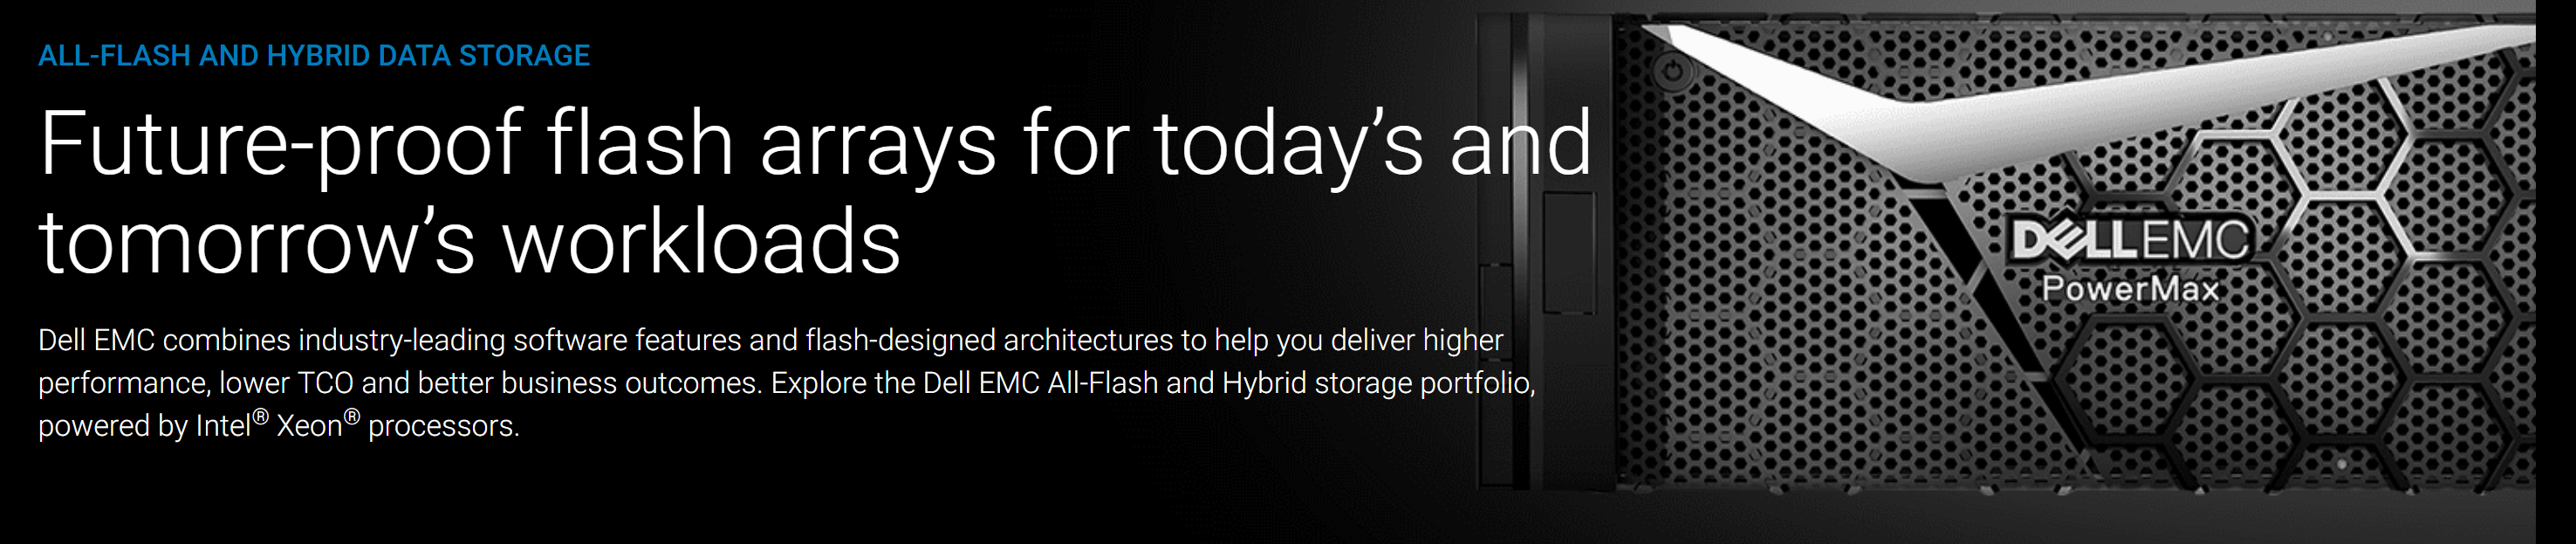 all-flash-hybrid-storage-solution